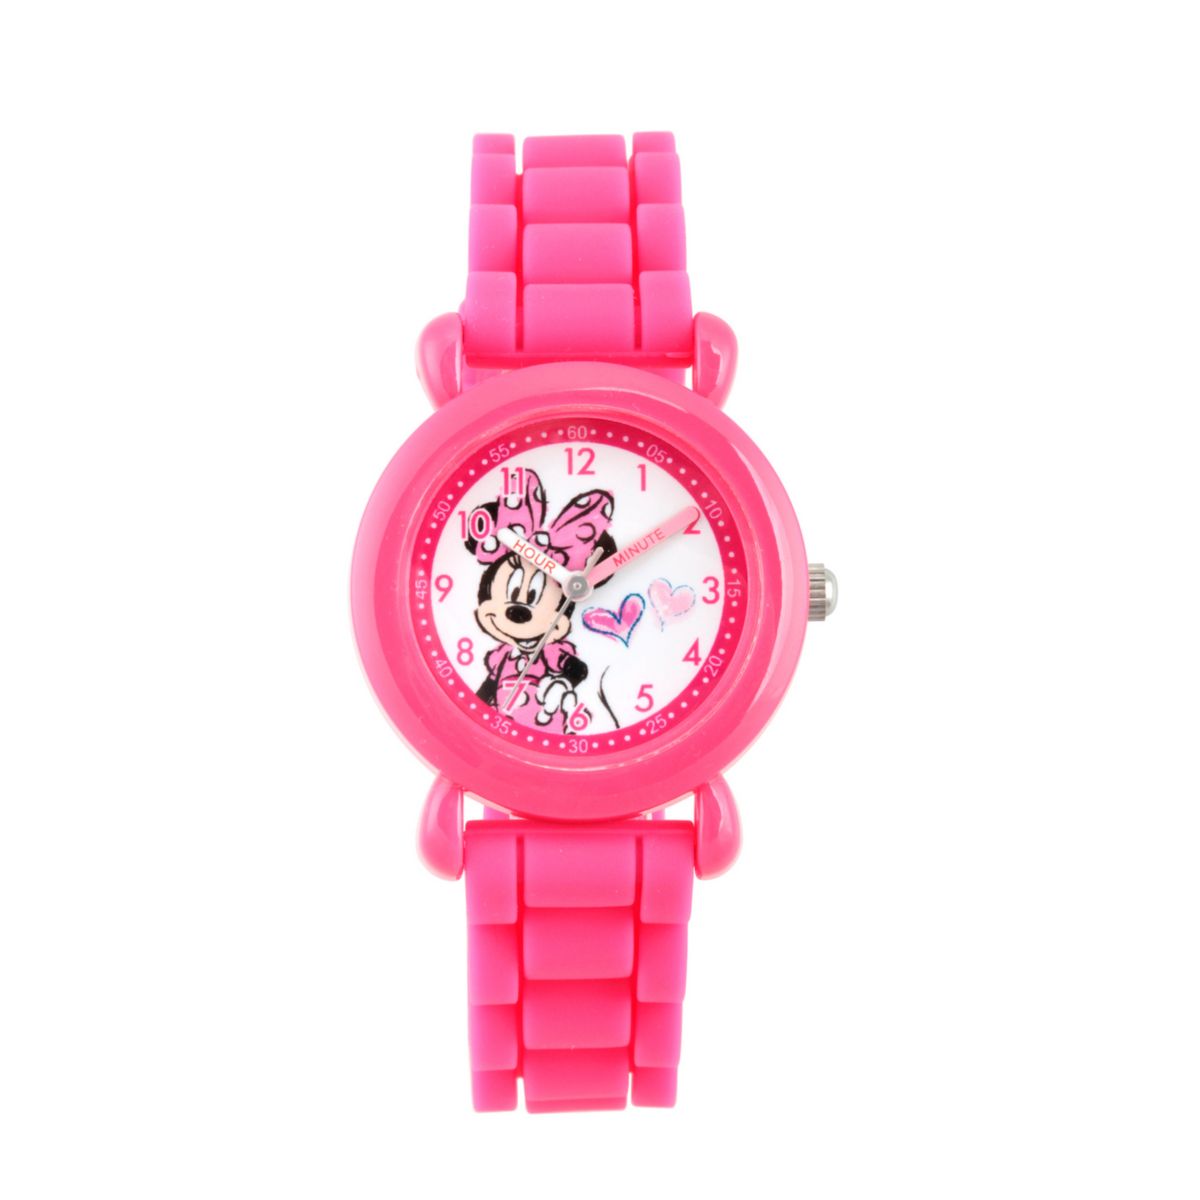 Детские часы для учителей Pink Time от Disney's Minnie Mouse Sketch Licensed Character